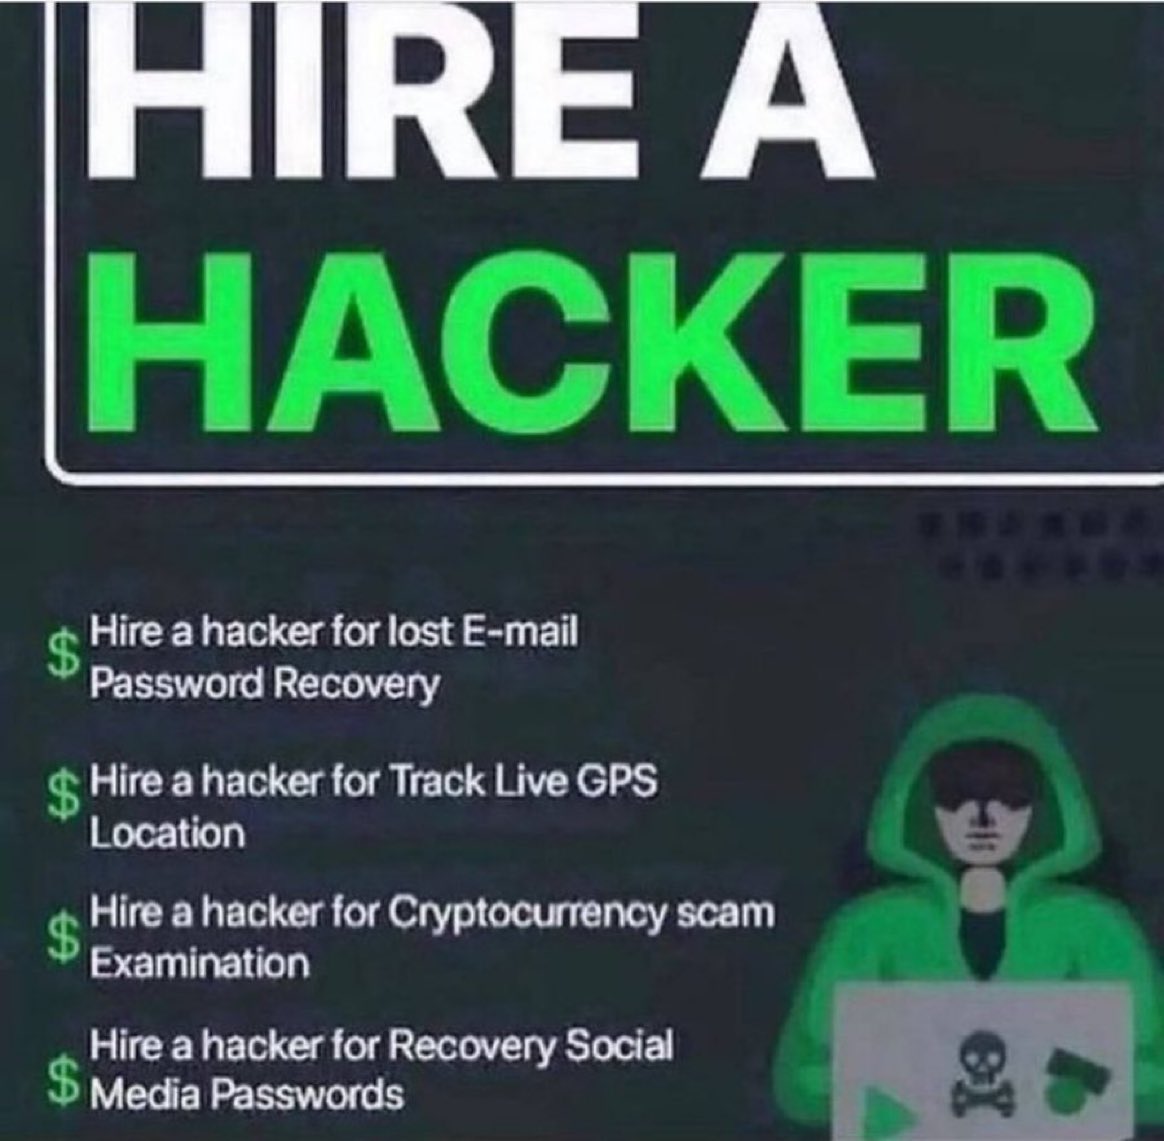 Text me now for any hacking or bypass Active 24/7
#anyomous
#sadapwhatsapphack #hackinstagrammurah
#facebook #hackerstayaway #hackingout
#accounthacking #mobilehacking #hackgmail
#hacksnapchat #blackhathacker #hackerindia #phishing #Phish #Hackedgmail